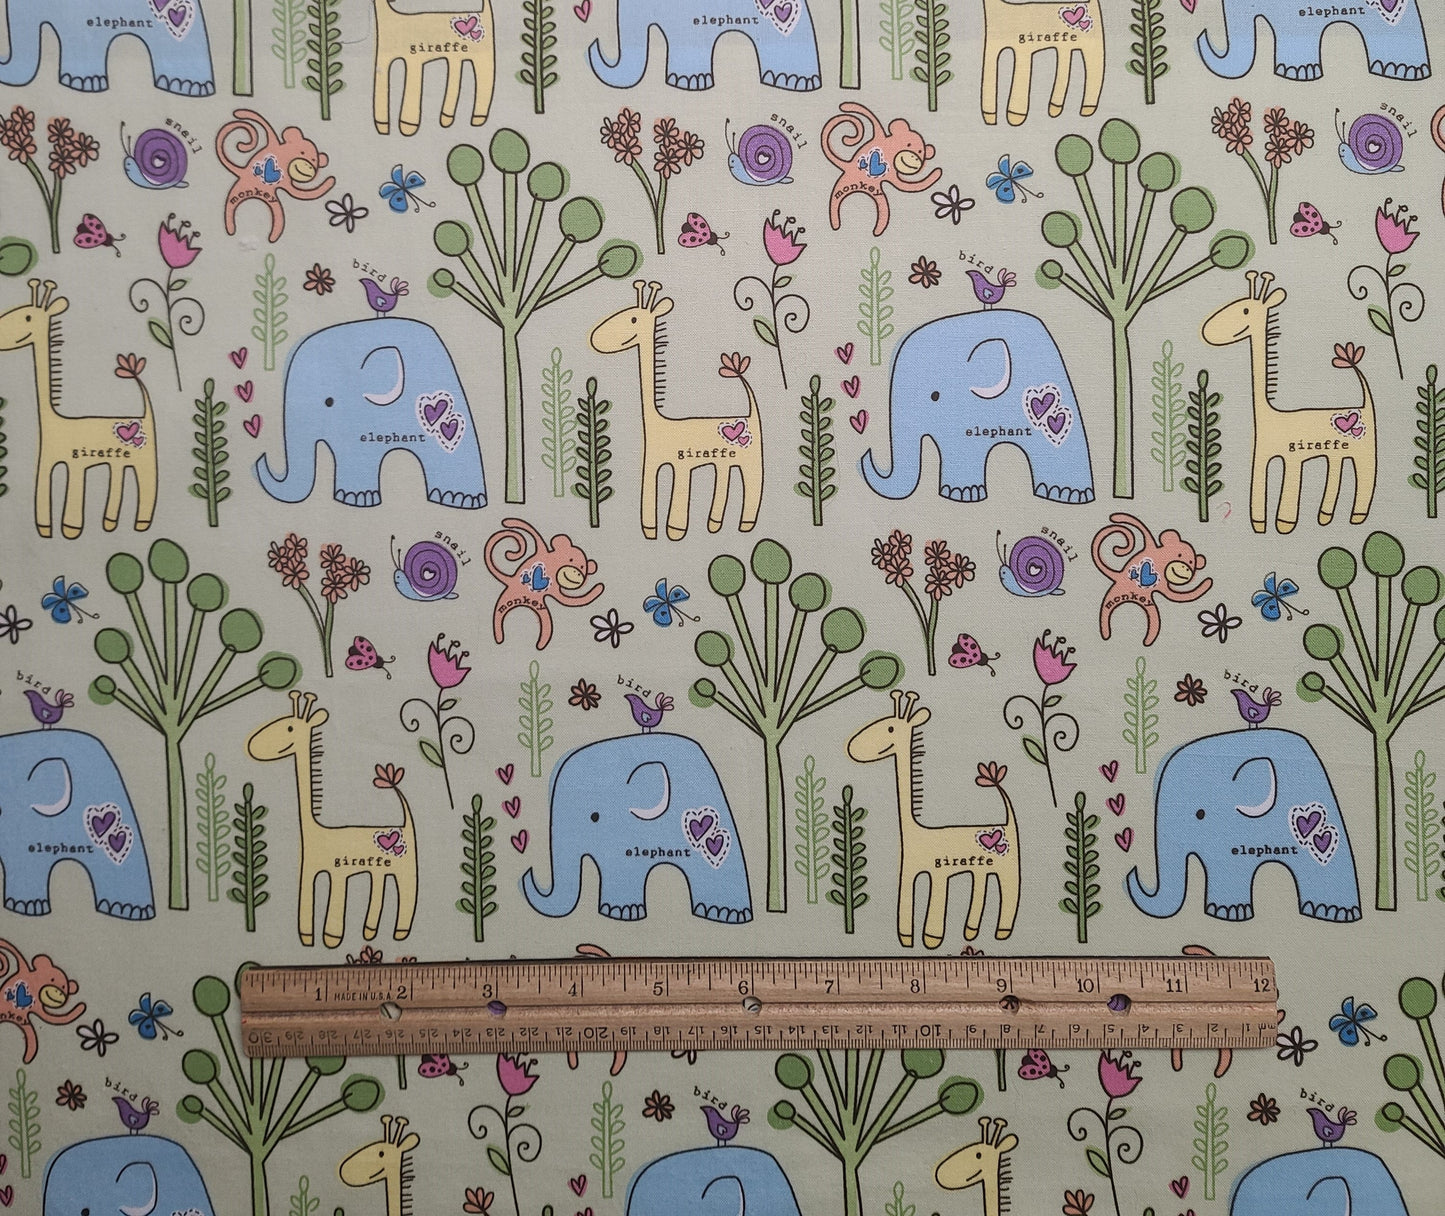 EOB - Colorbok for JoAnn Fabrics - Pale Green Fabric / Cartoon-Style Jungle Print / Elephant, Monkey, Giraffe / Pastel Blue, Yellow, Purple